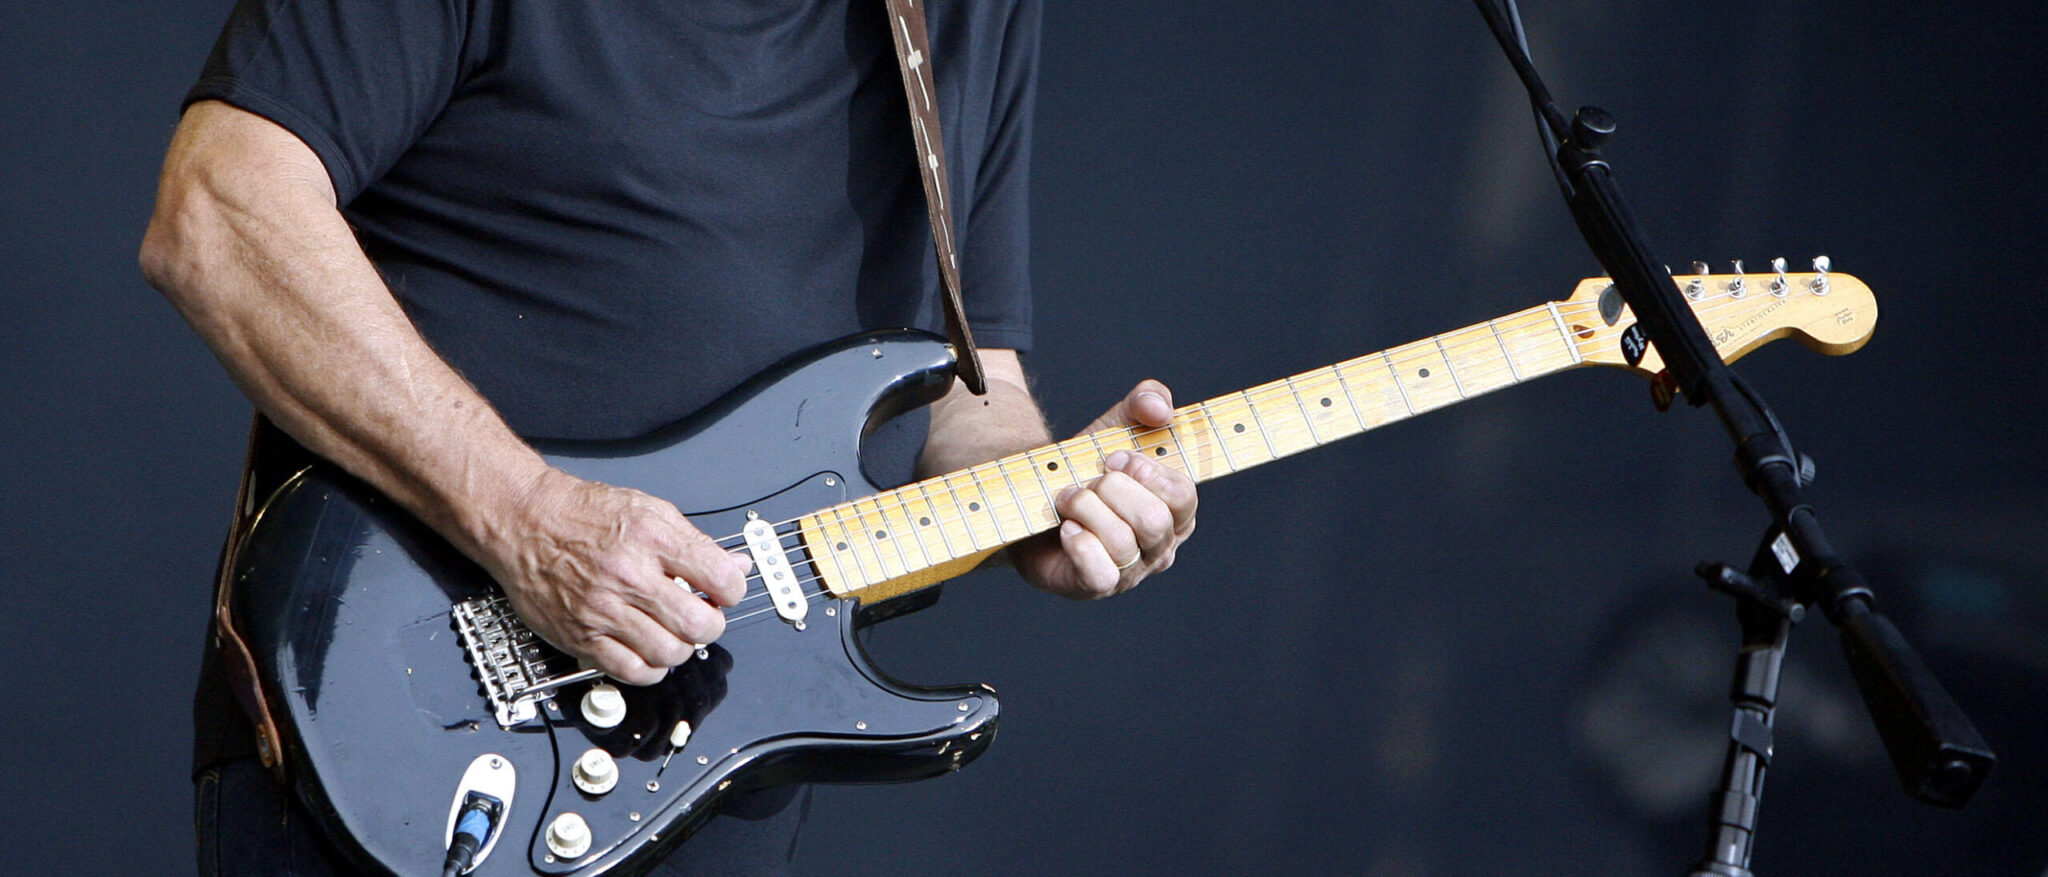 How to sound like David Gilmour